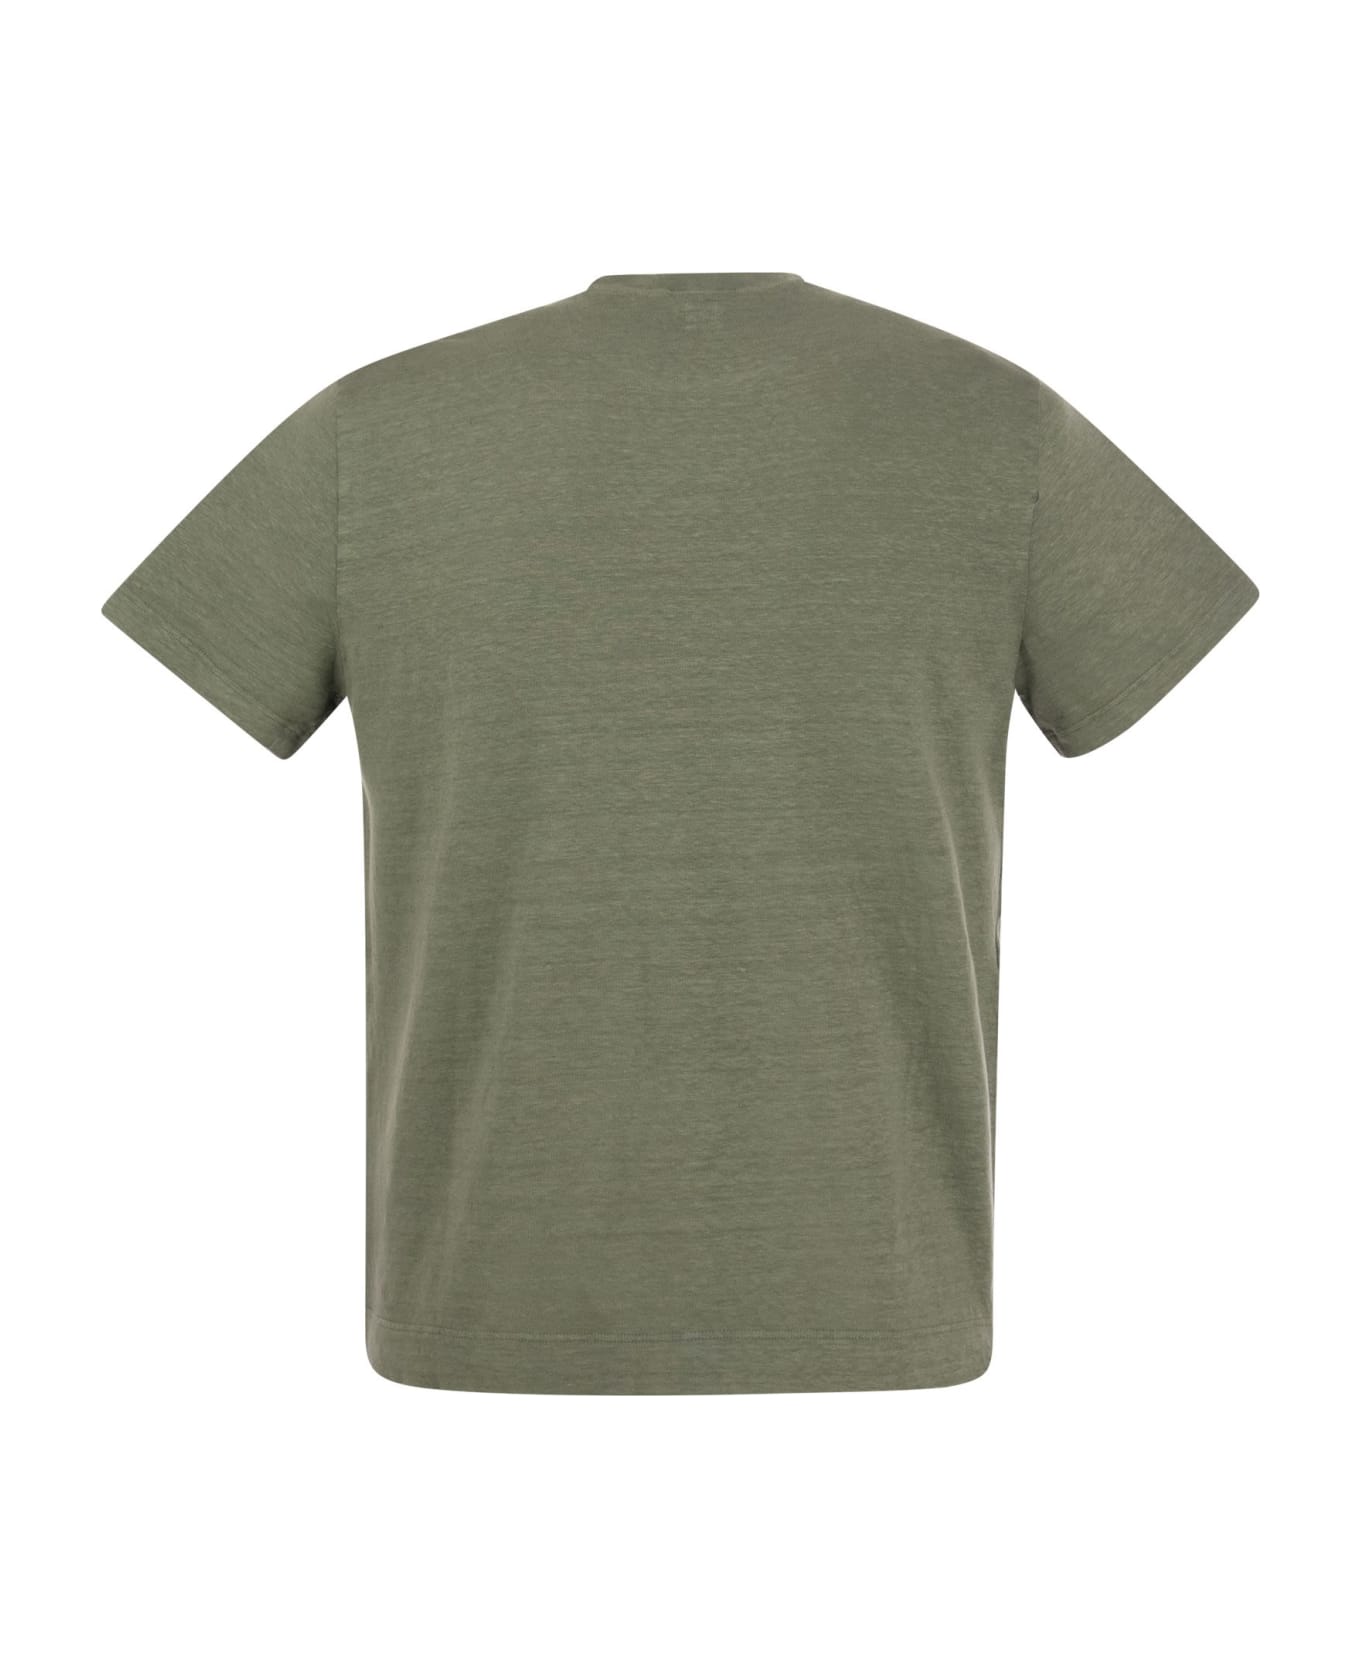 Fedeli Exreme - Linen Flex T-shirt - Olive